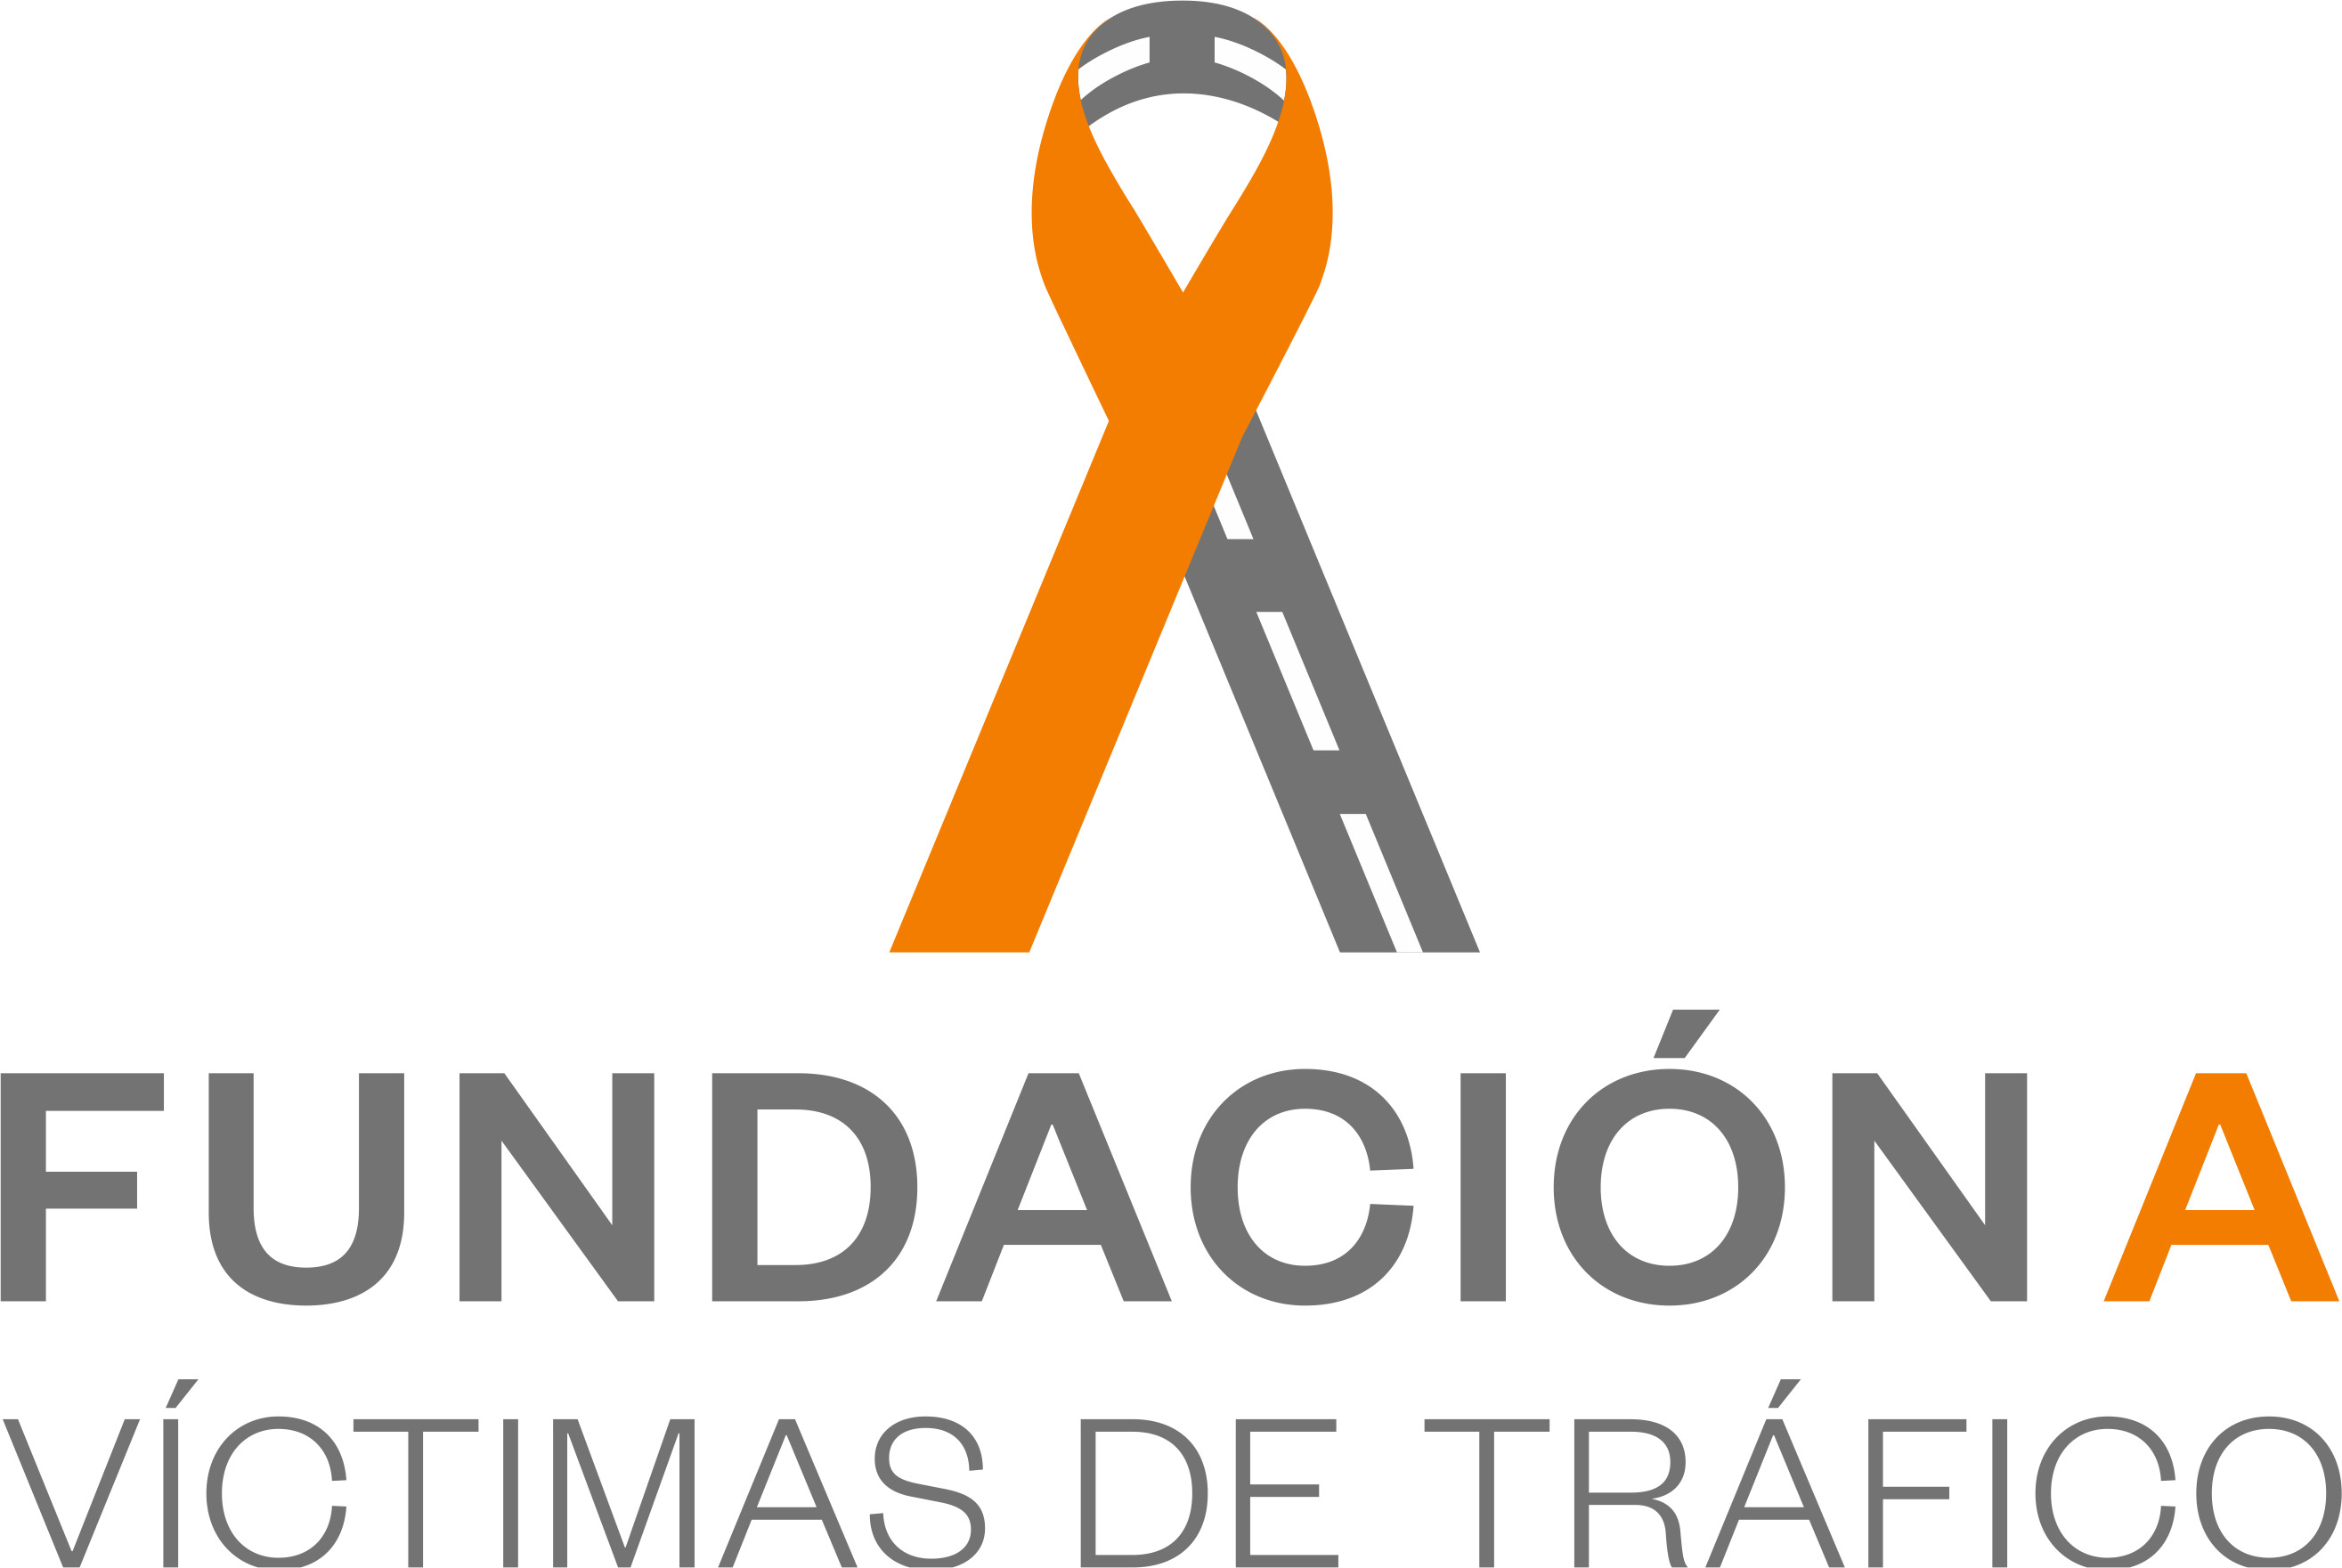 Fundación A Víctimas de Tráfico